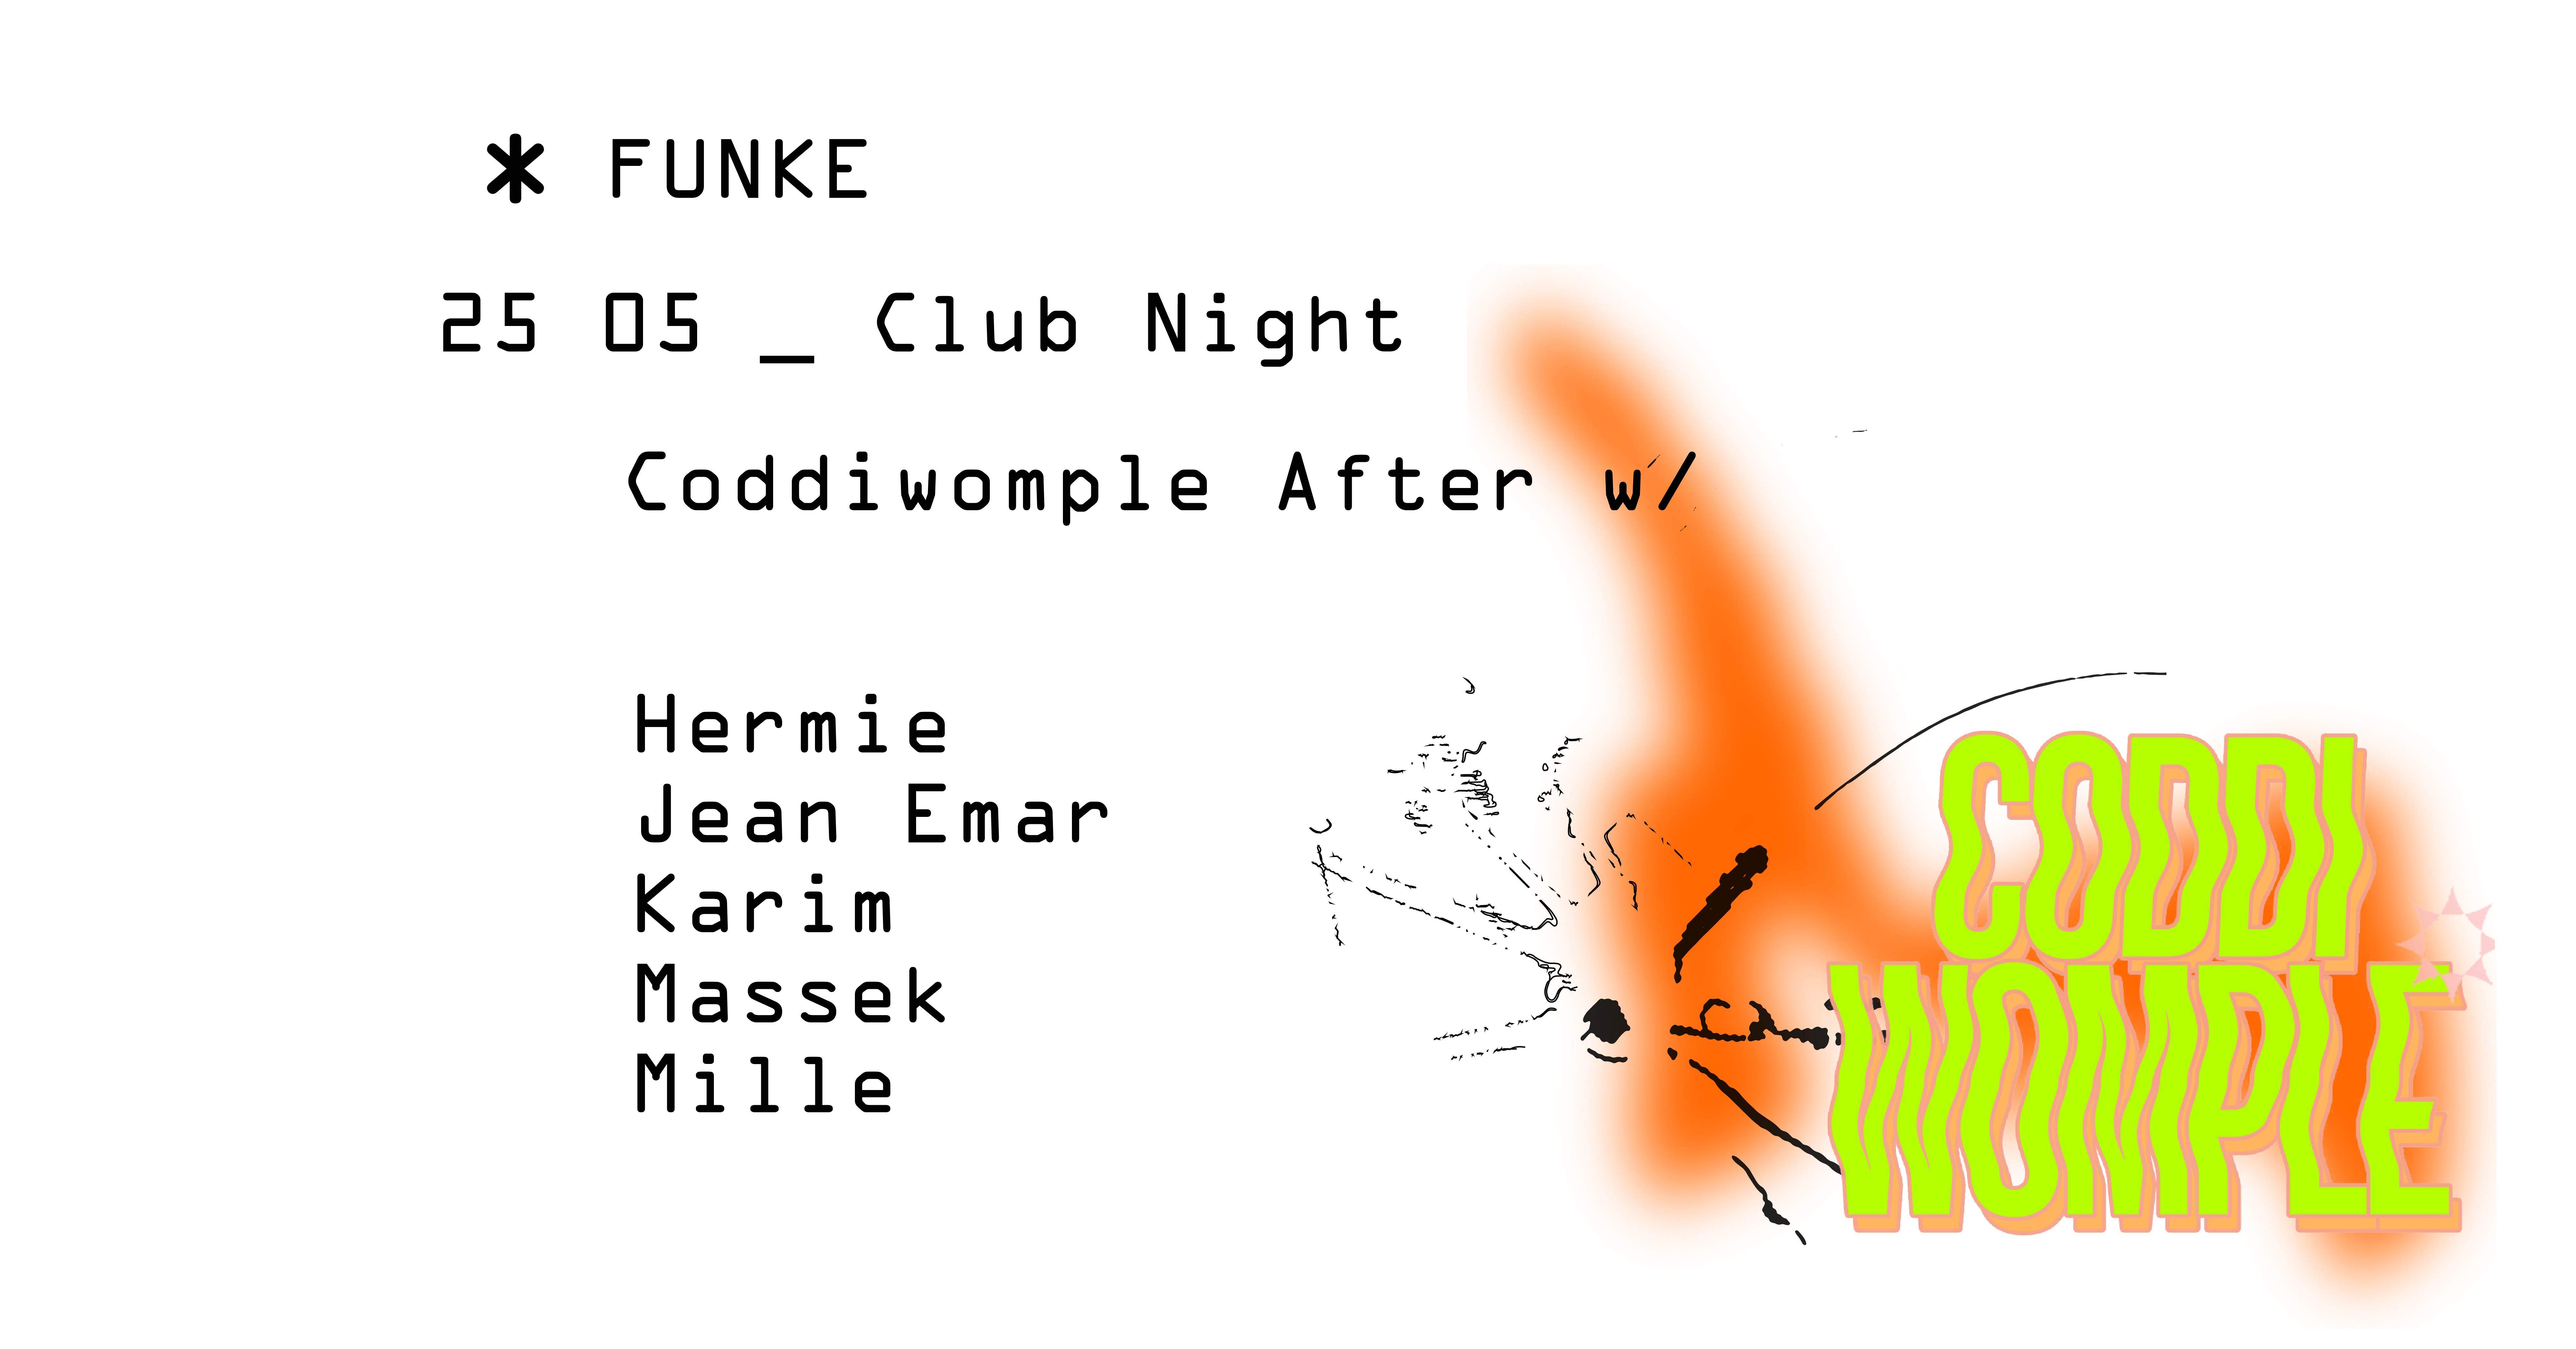 Funke_Coddiwomple After with Hermie, Jean Emar, Karim, Massek, Mille - フライヤー表